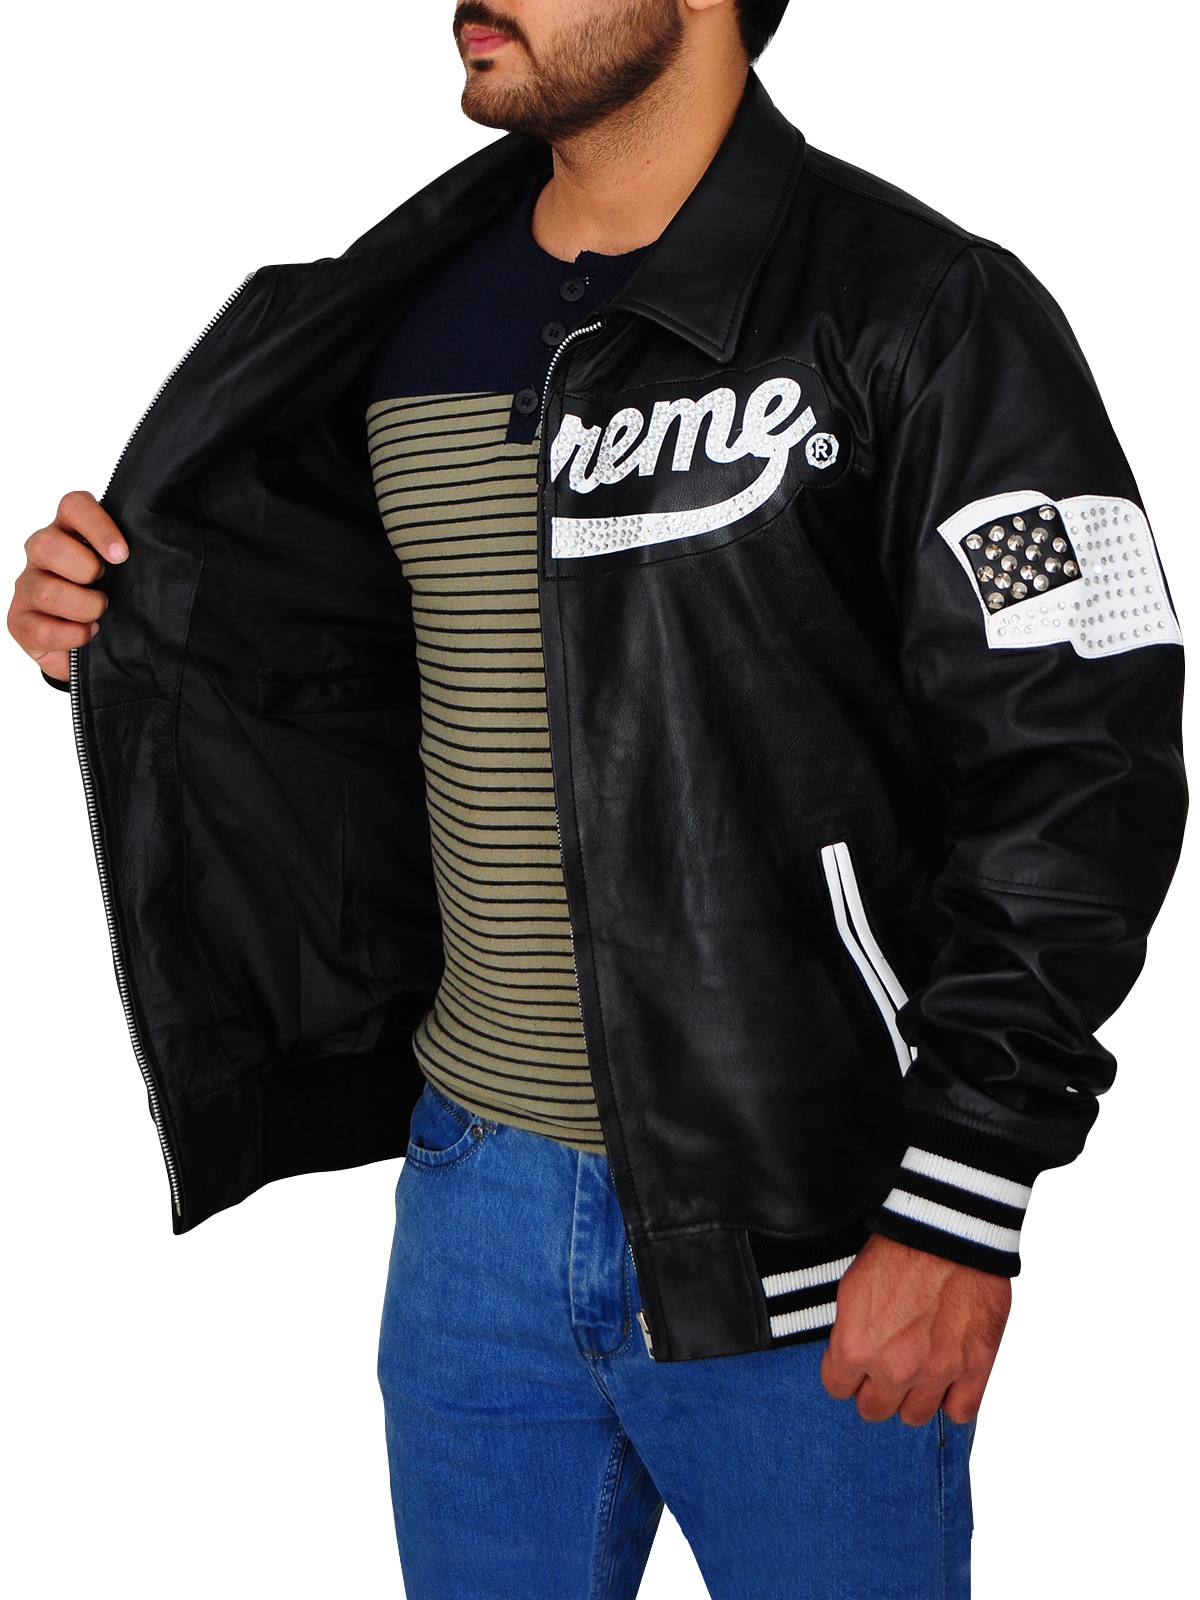 Supreme Black Leather Jacket | Next Leather Jackets